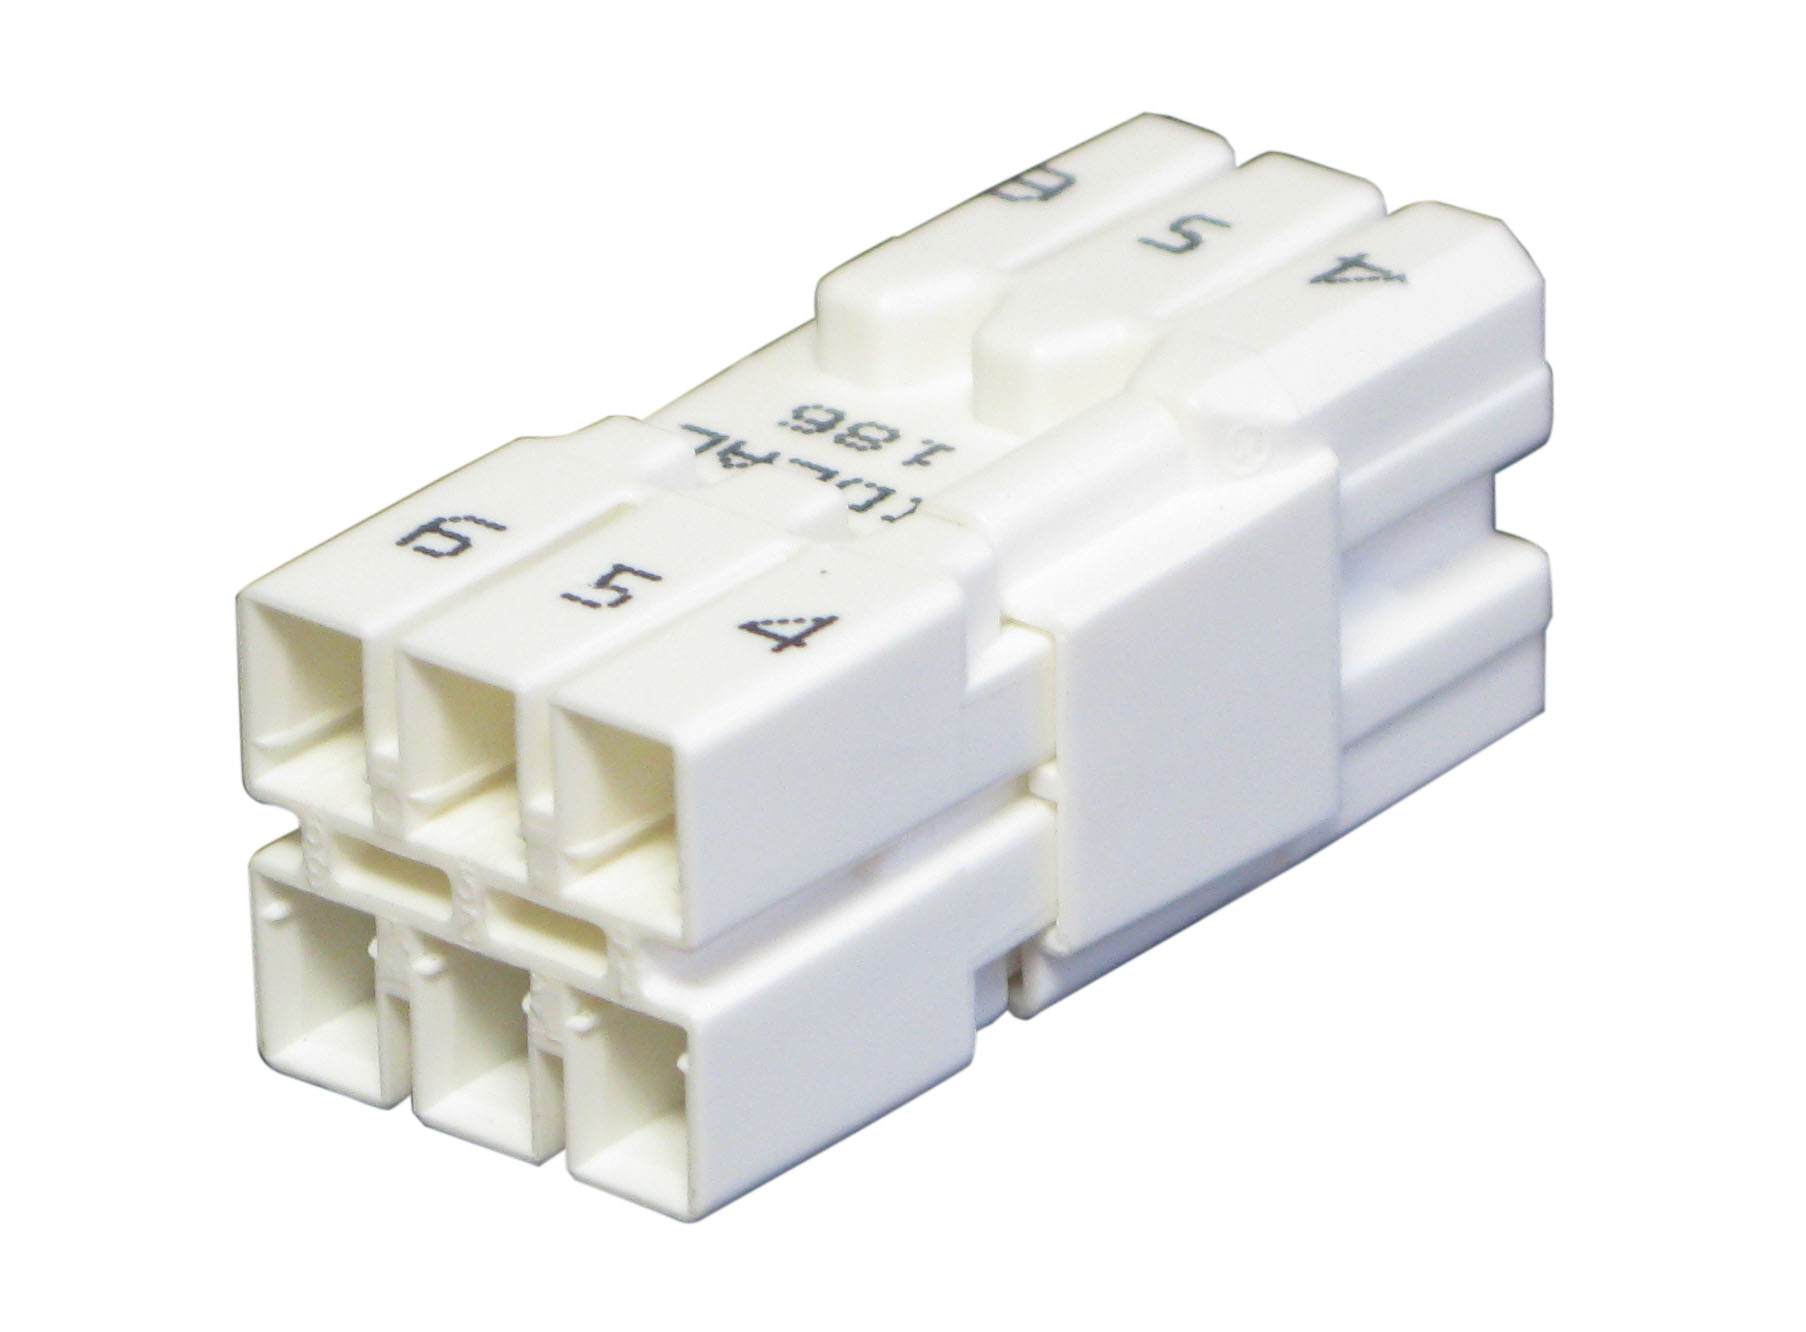 PowerPlug® Luminaire Disconnect, Model 184 Female, Box of 2,000